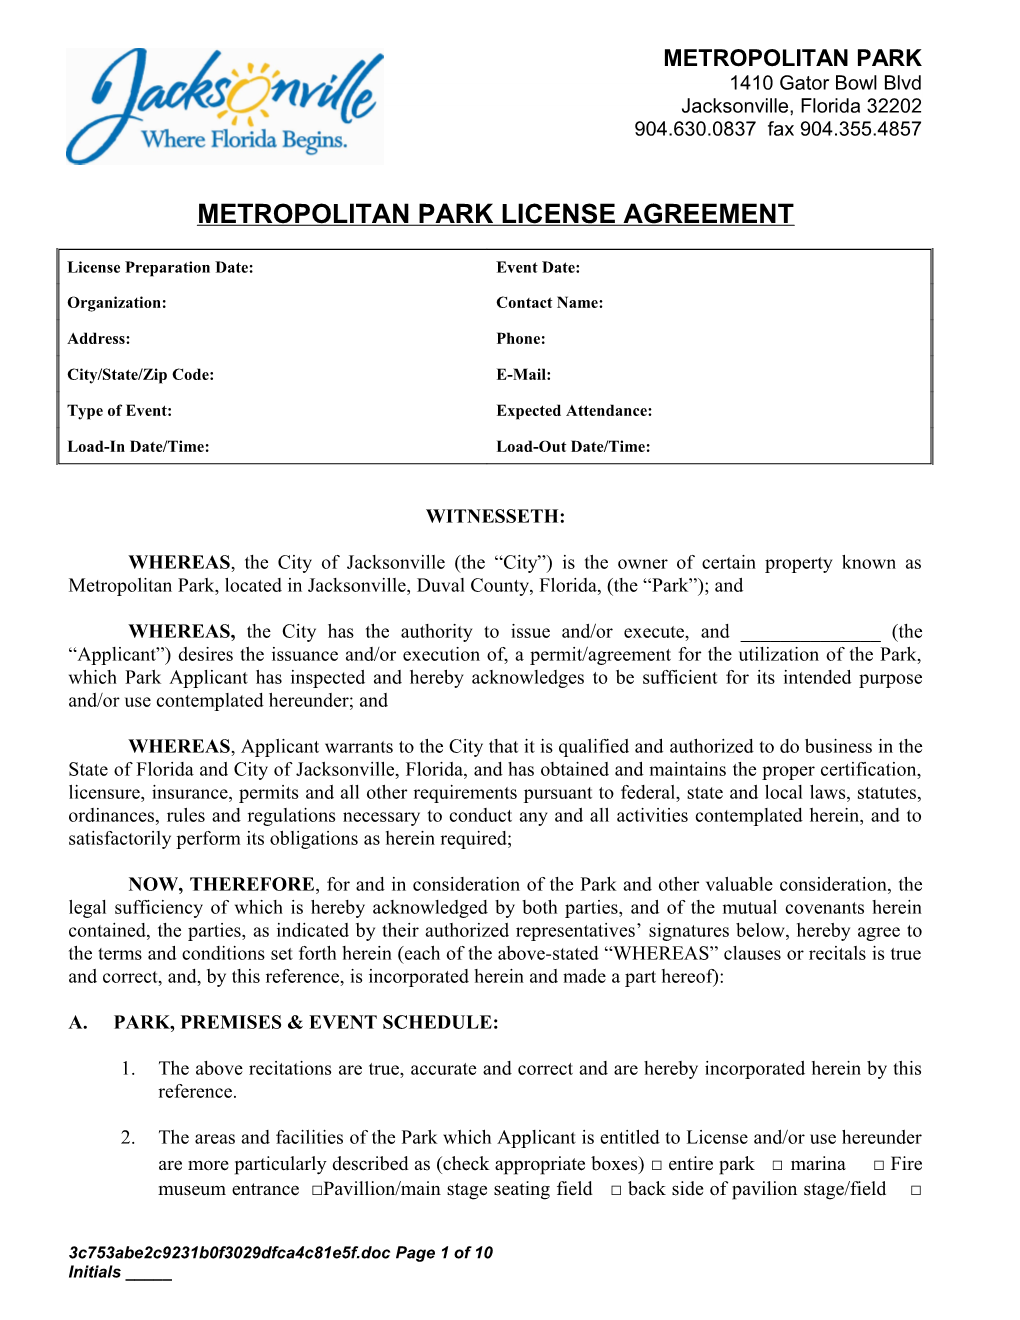 Metropolitan Park License Agreement